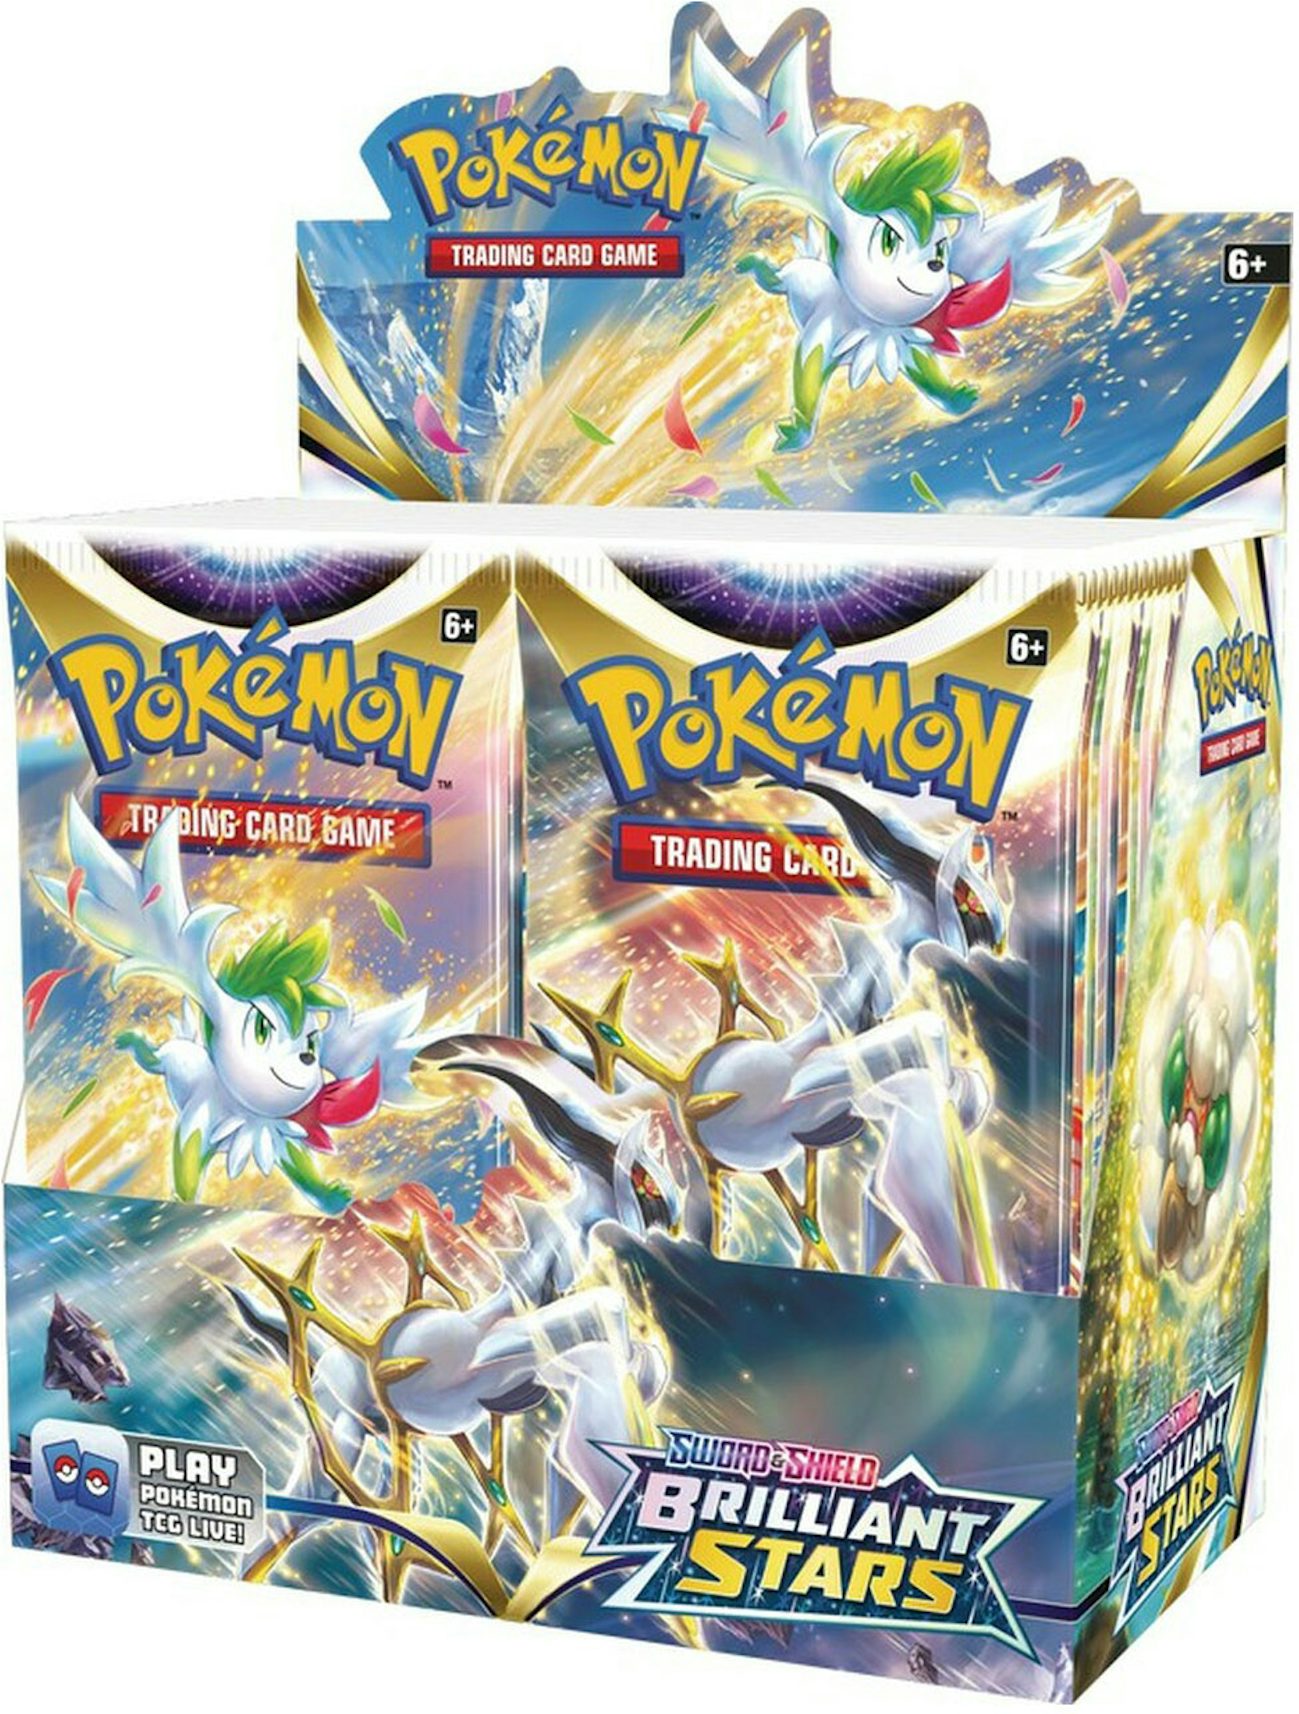 Pokémon TCG Sword & Shield Astral Radiance Booster Box - US